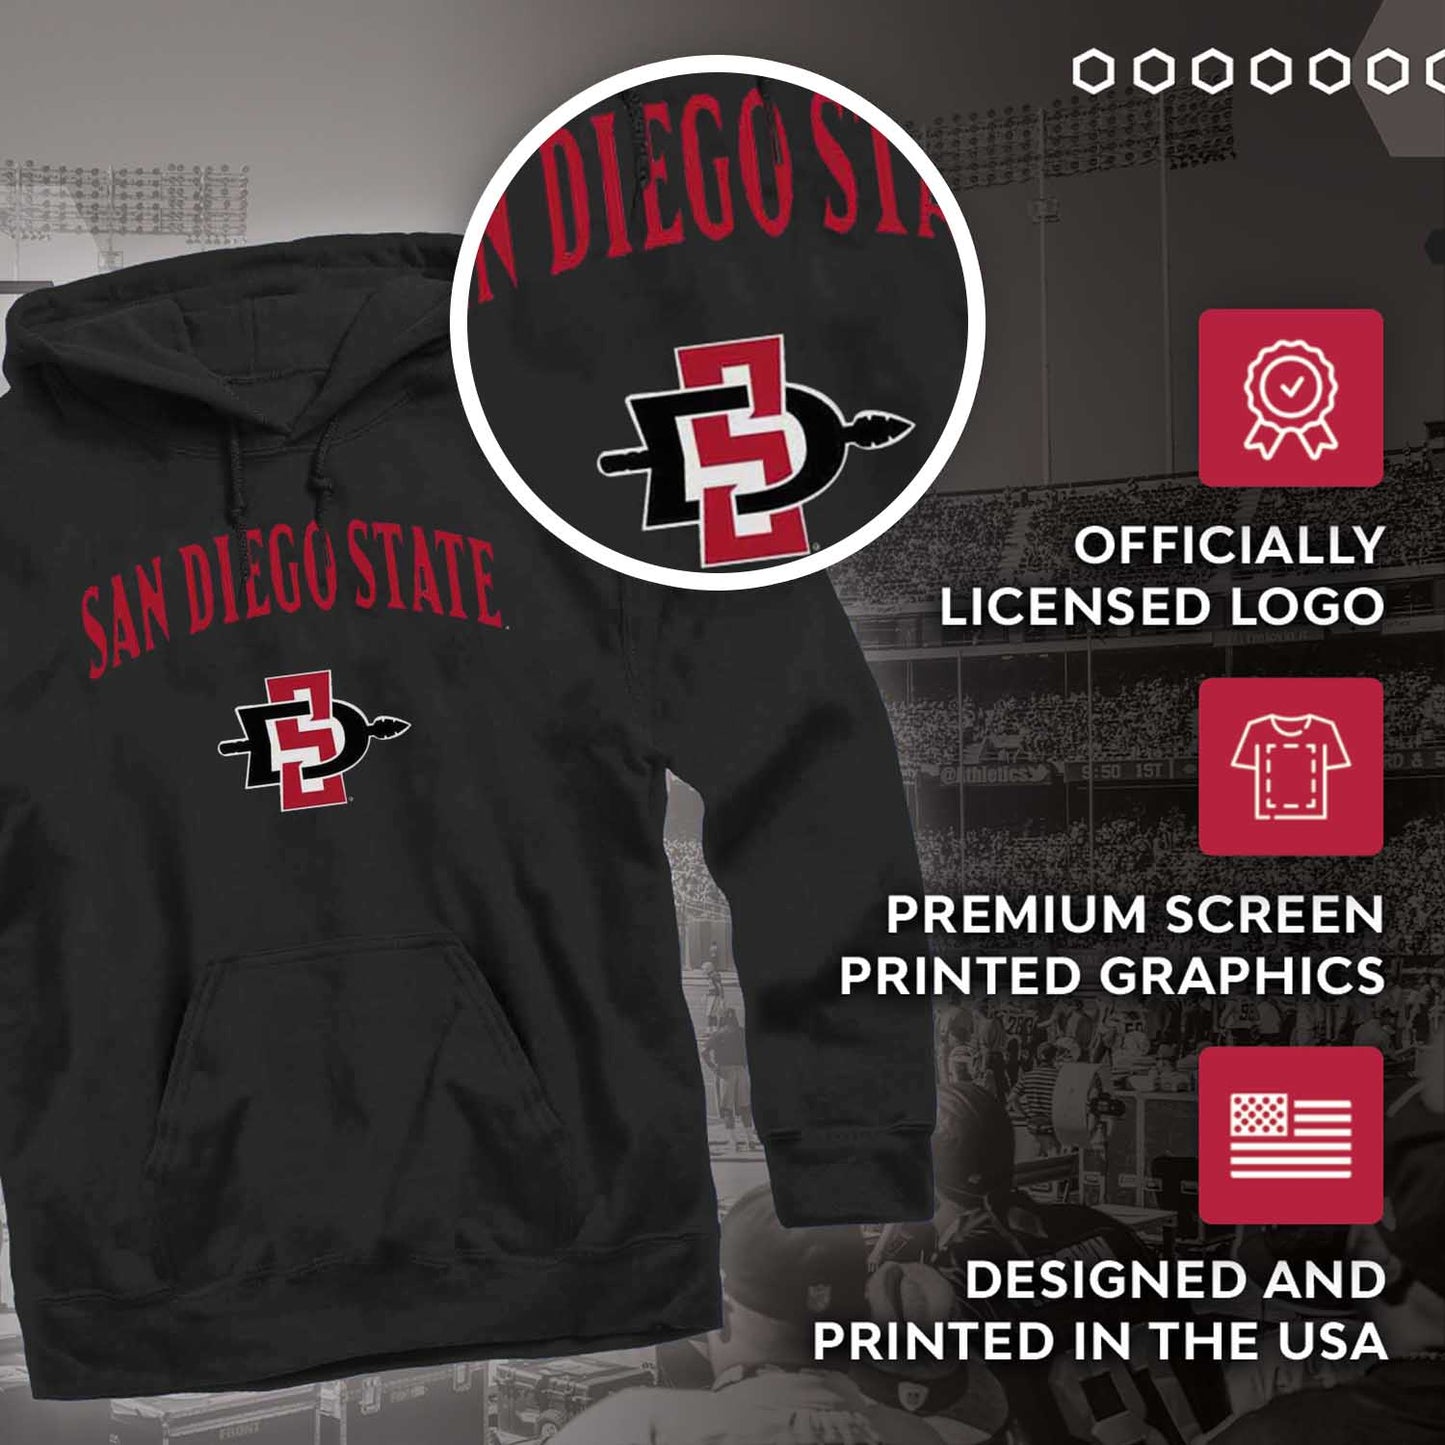 San Diego State Aztecs Adult Arch & Logo Soft Style Gameday Hooded Sweatshirt - Black